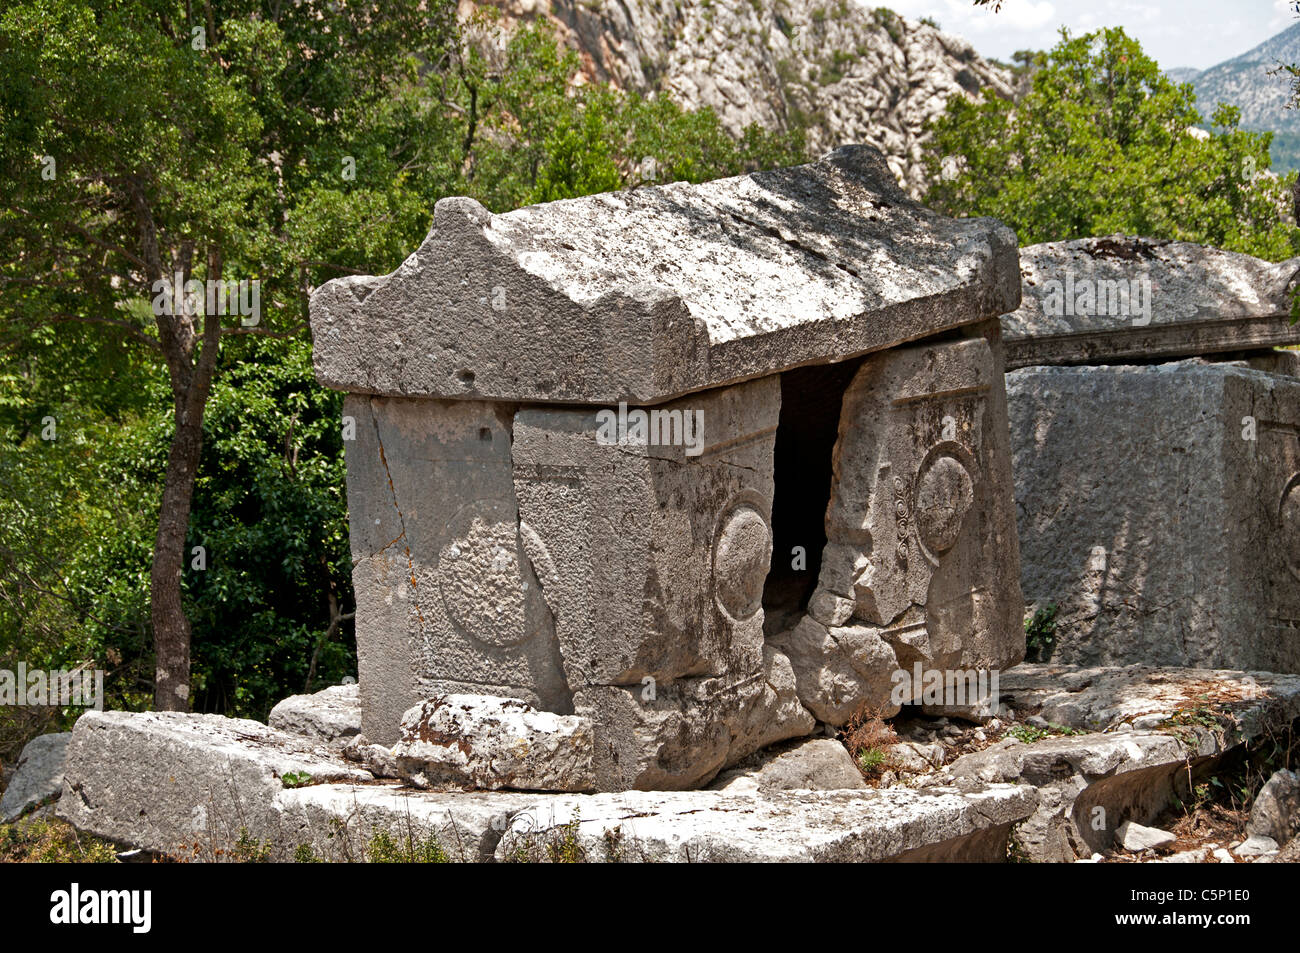 Tumba tumbas Termessos Turquía Antalya ciudad de Pisidia, 400 A.C. Foto de stock